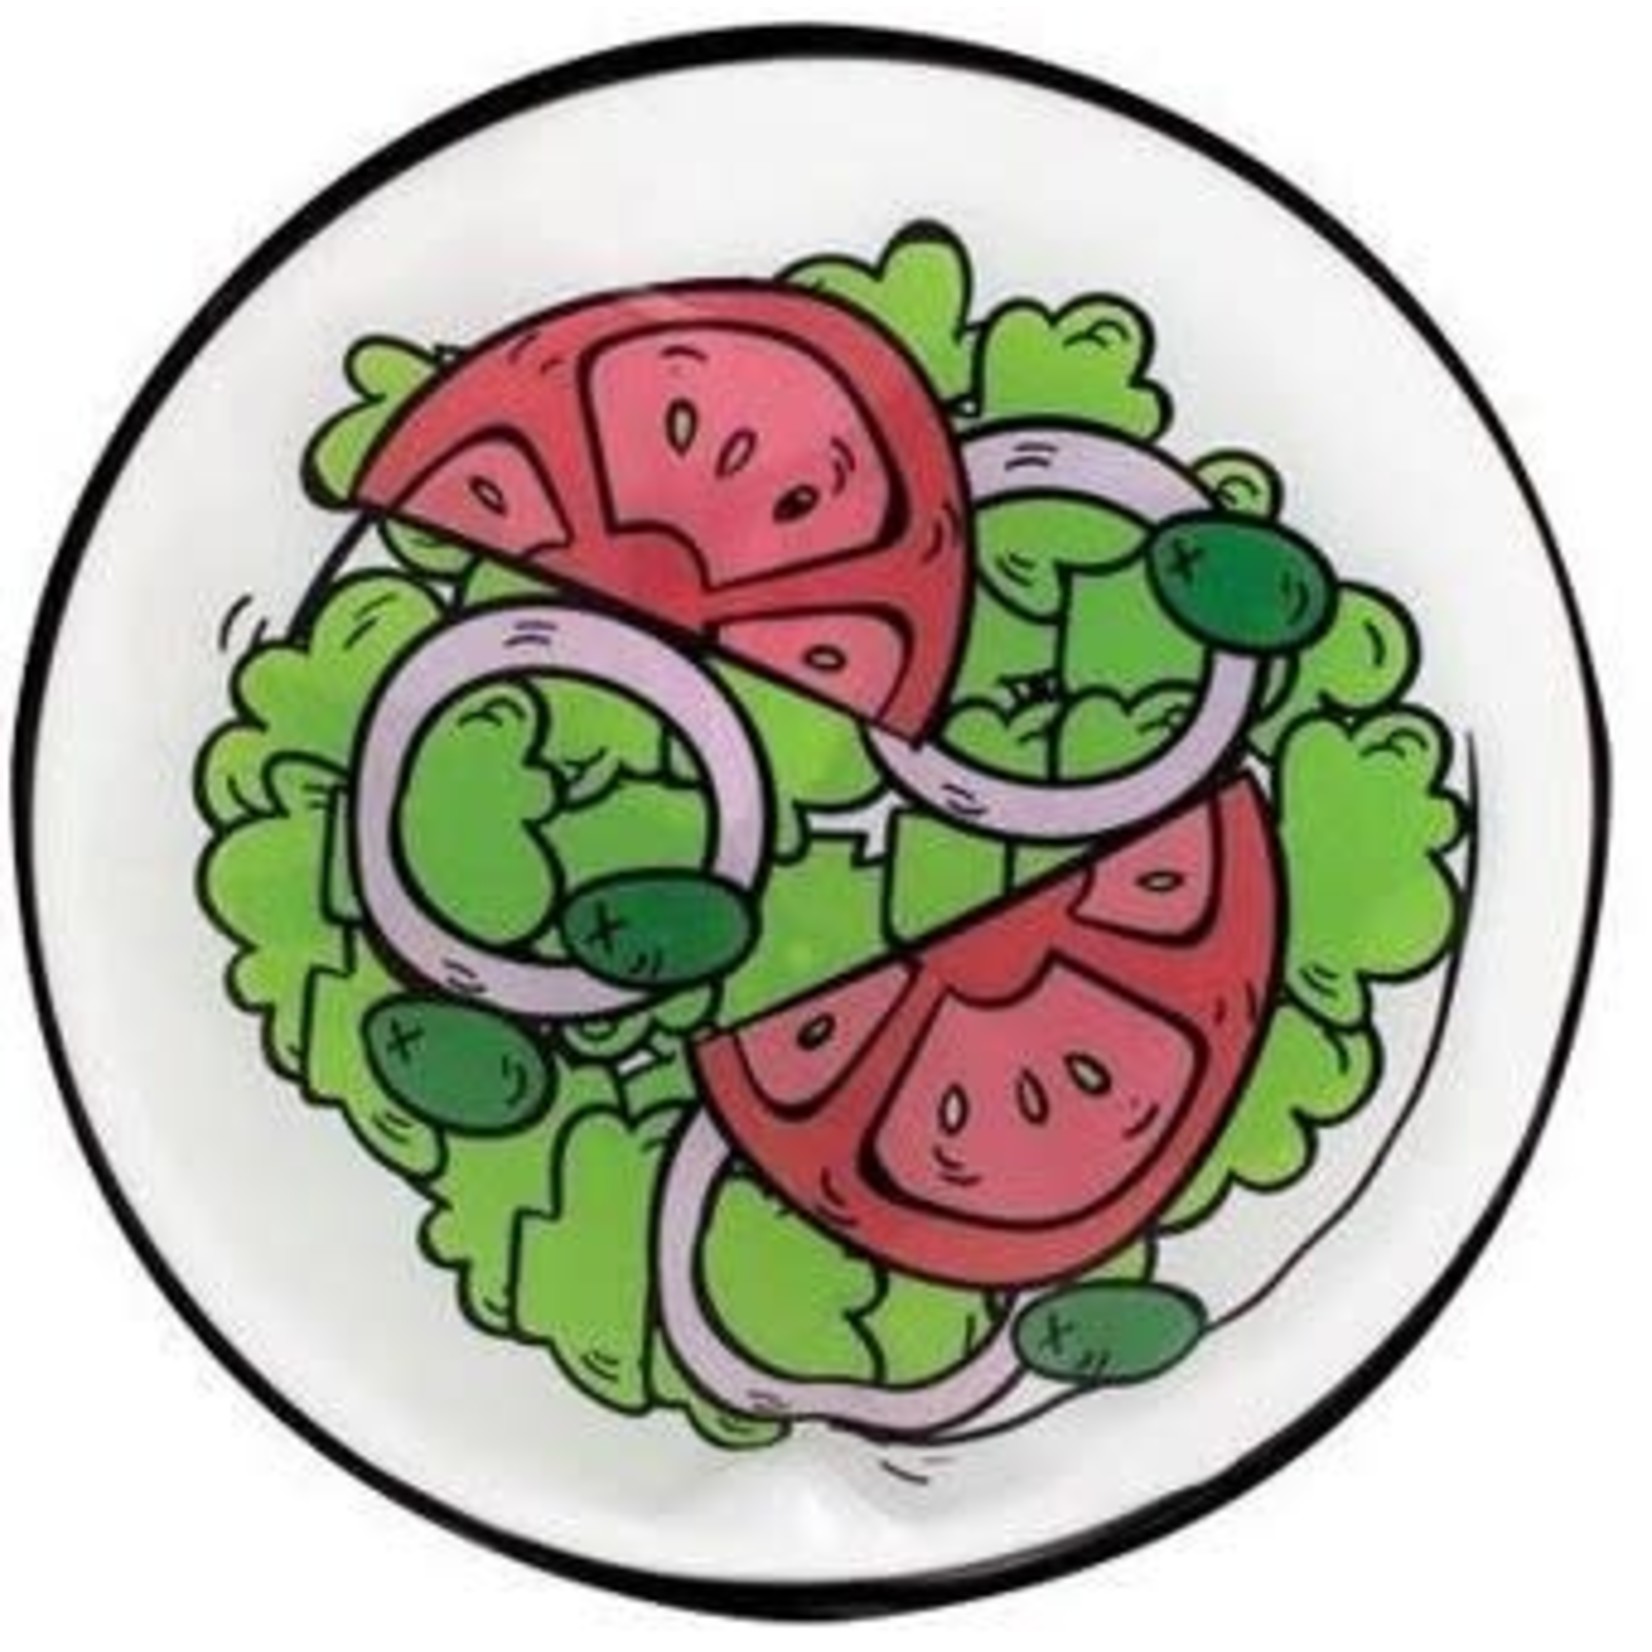 GEOCAN GEOCAN-Blocs réfrigérants salade ( paquet de 2)